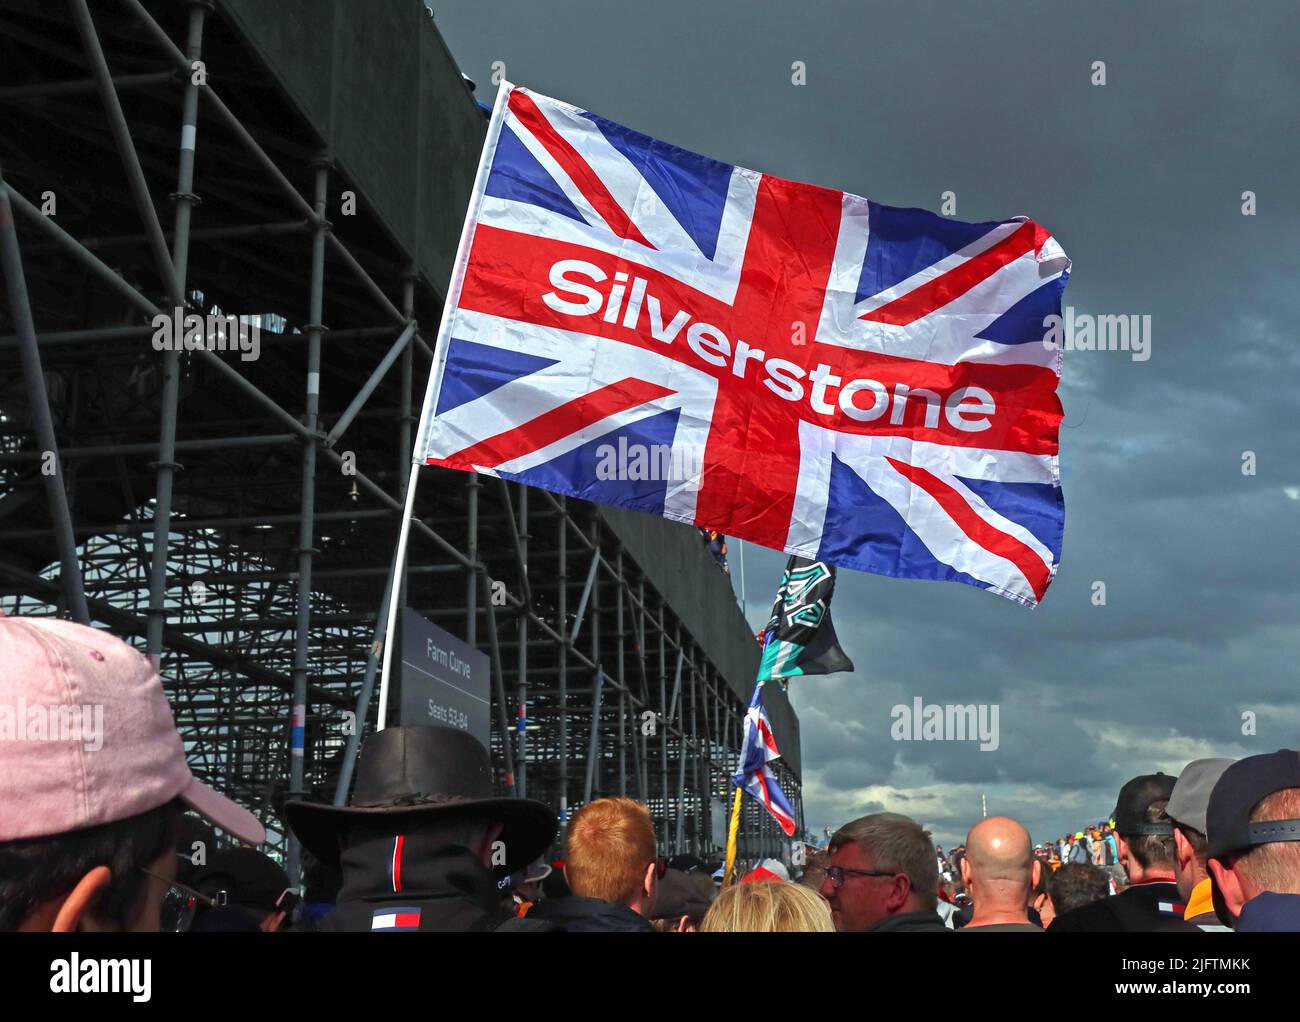 Silverstone British Union Jack Flag, Silverstone Circuit, Silverstone Village, Towcester, Northamptonshire, ENGLAND, GROSSBRITANNIEN, NN12 8TN Stockfoto